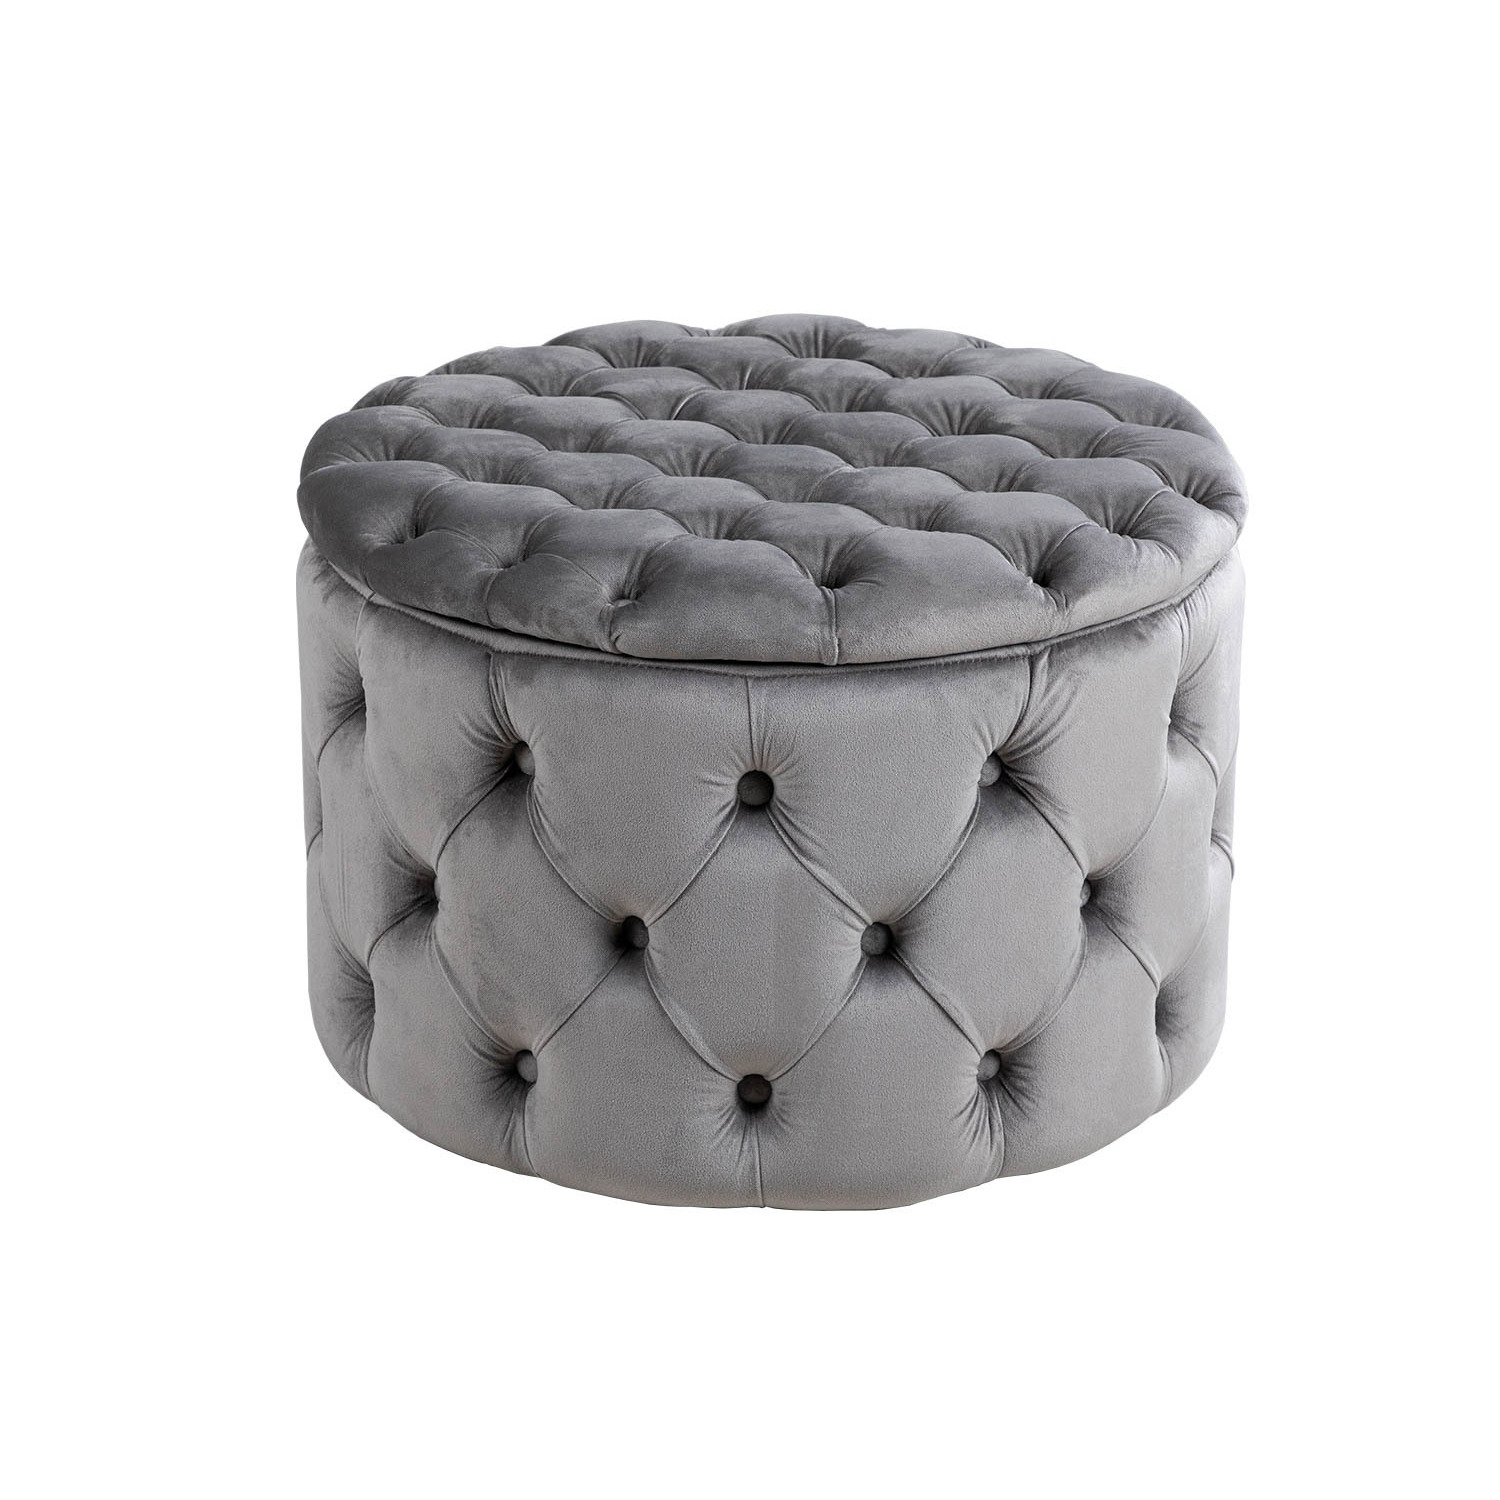 Medium Round Storage Ottoman in Grey Velvet with Button Top - Mia - image 1